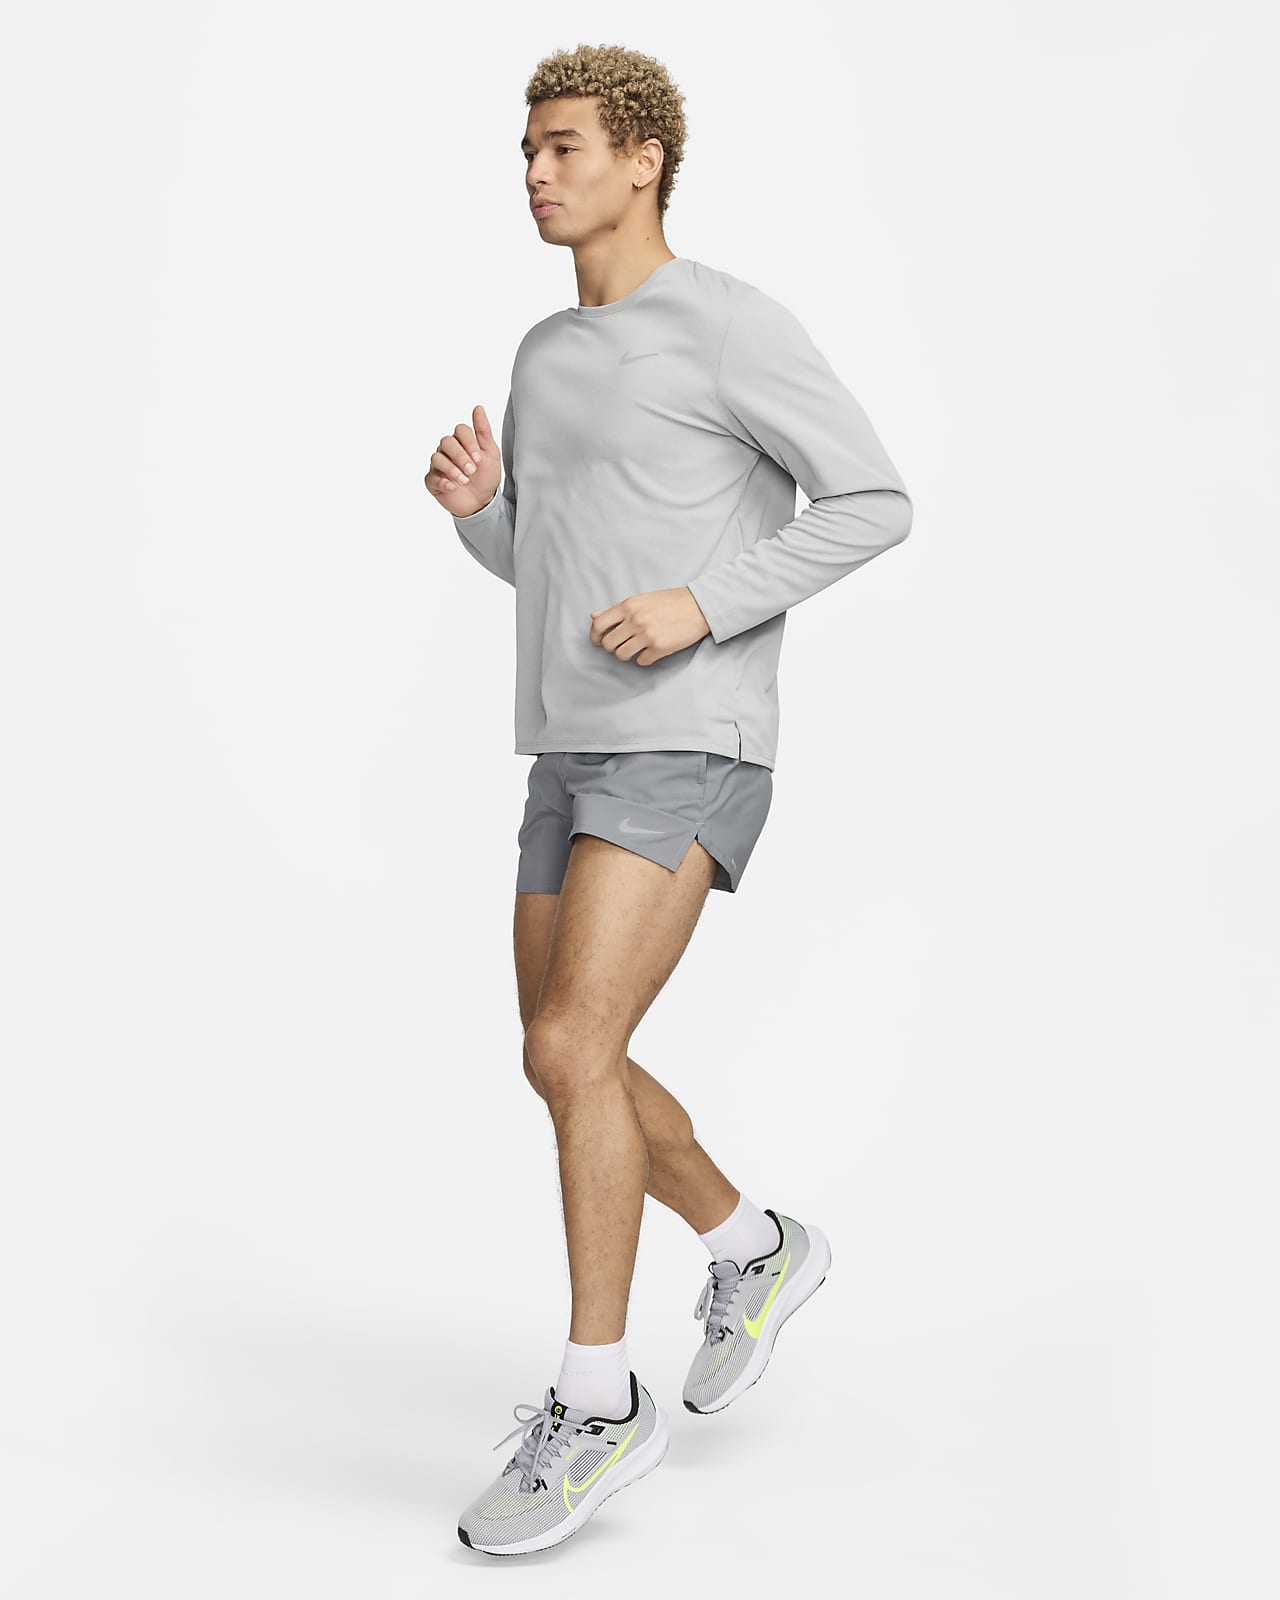 Runners' lab, Nike Dri-Fit Medium Support Zip